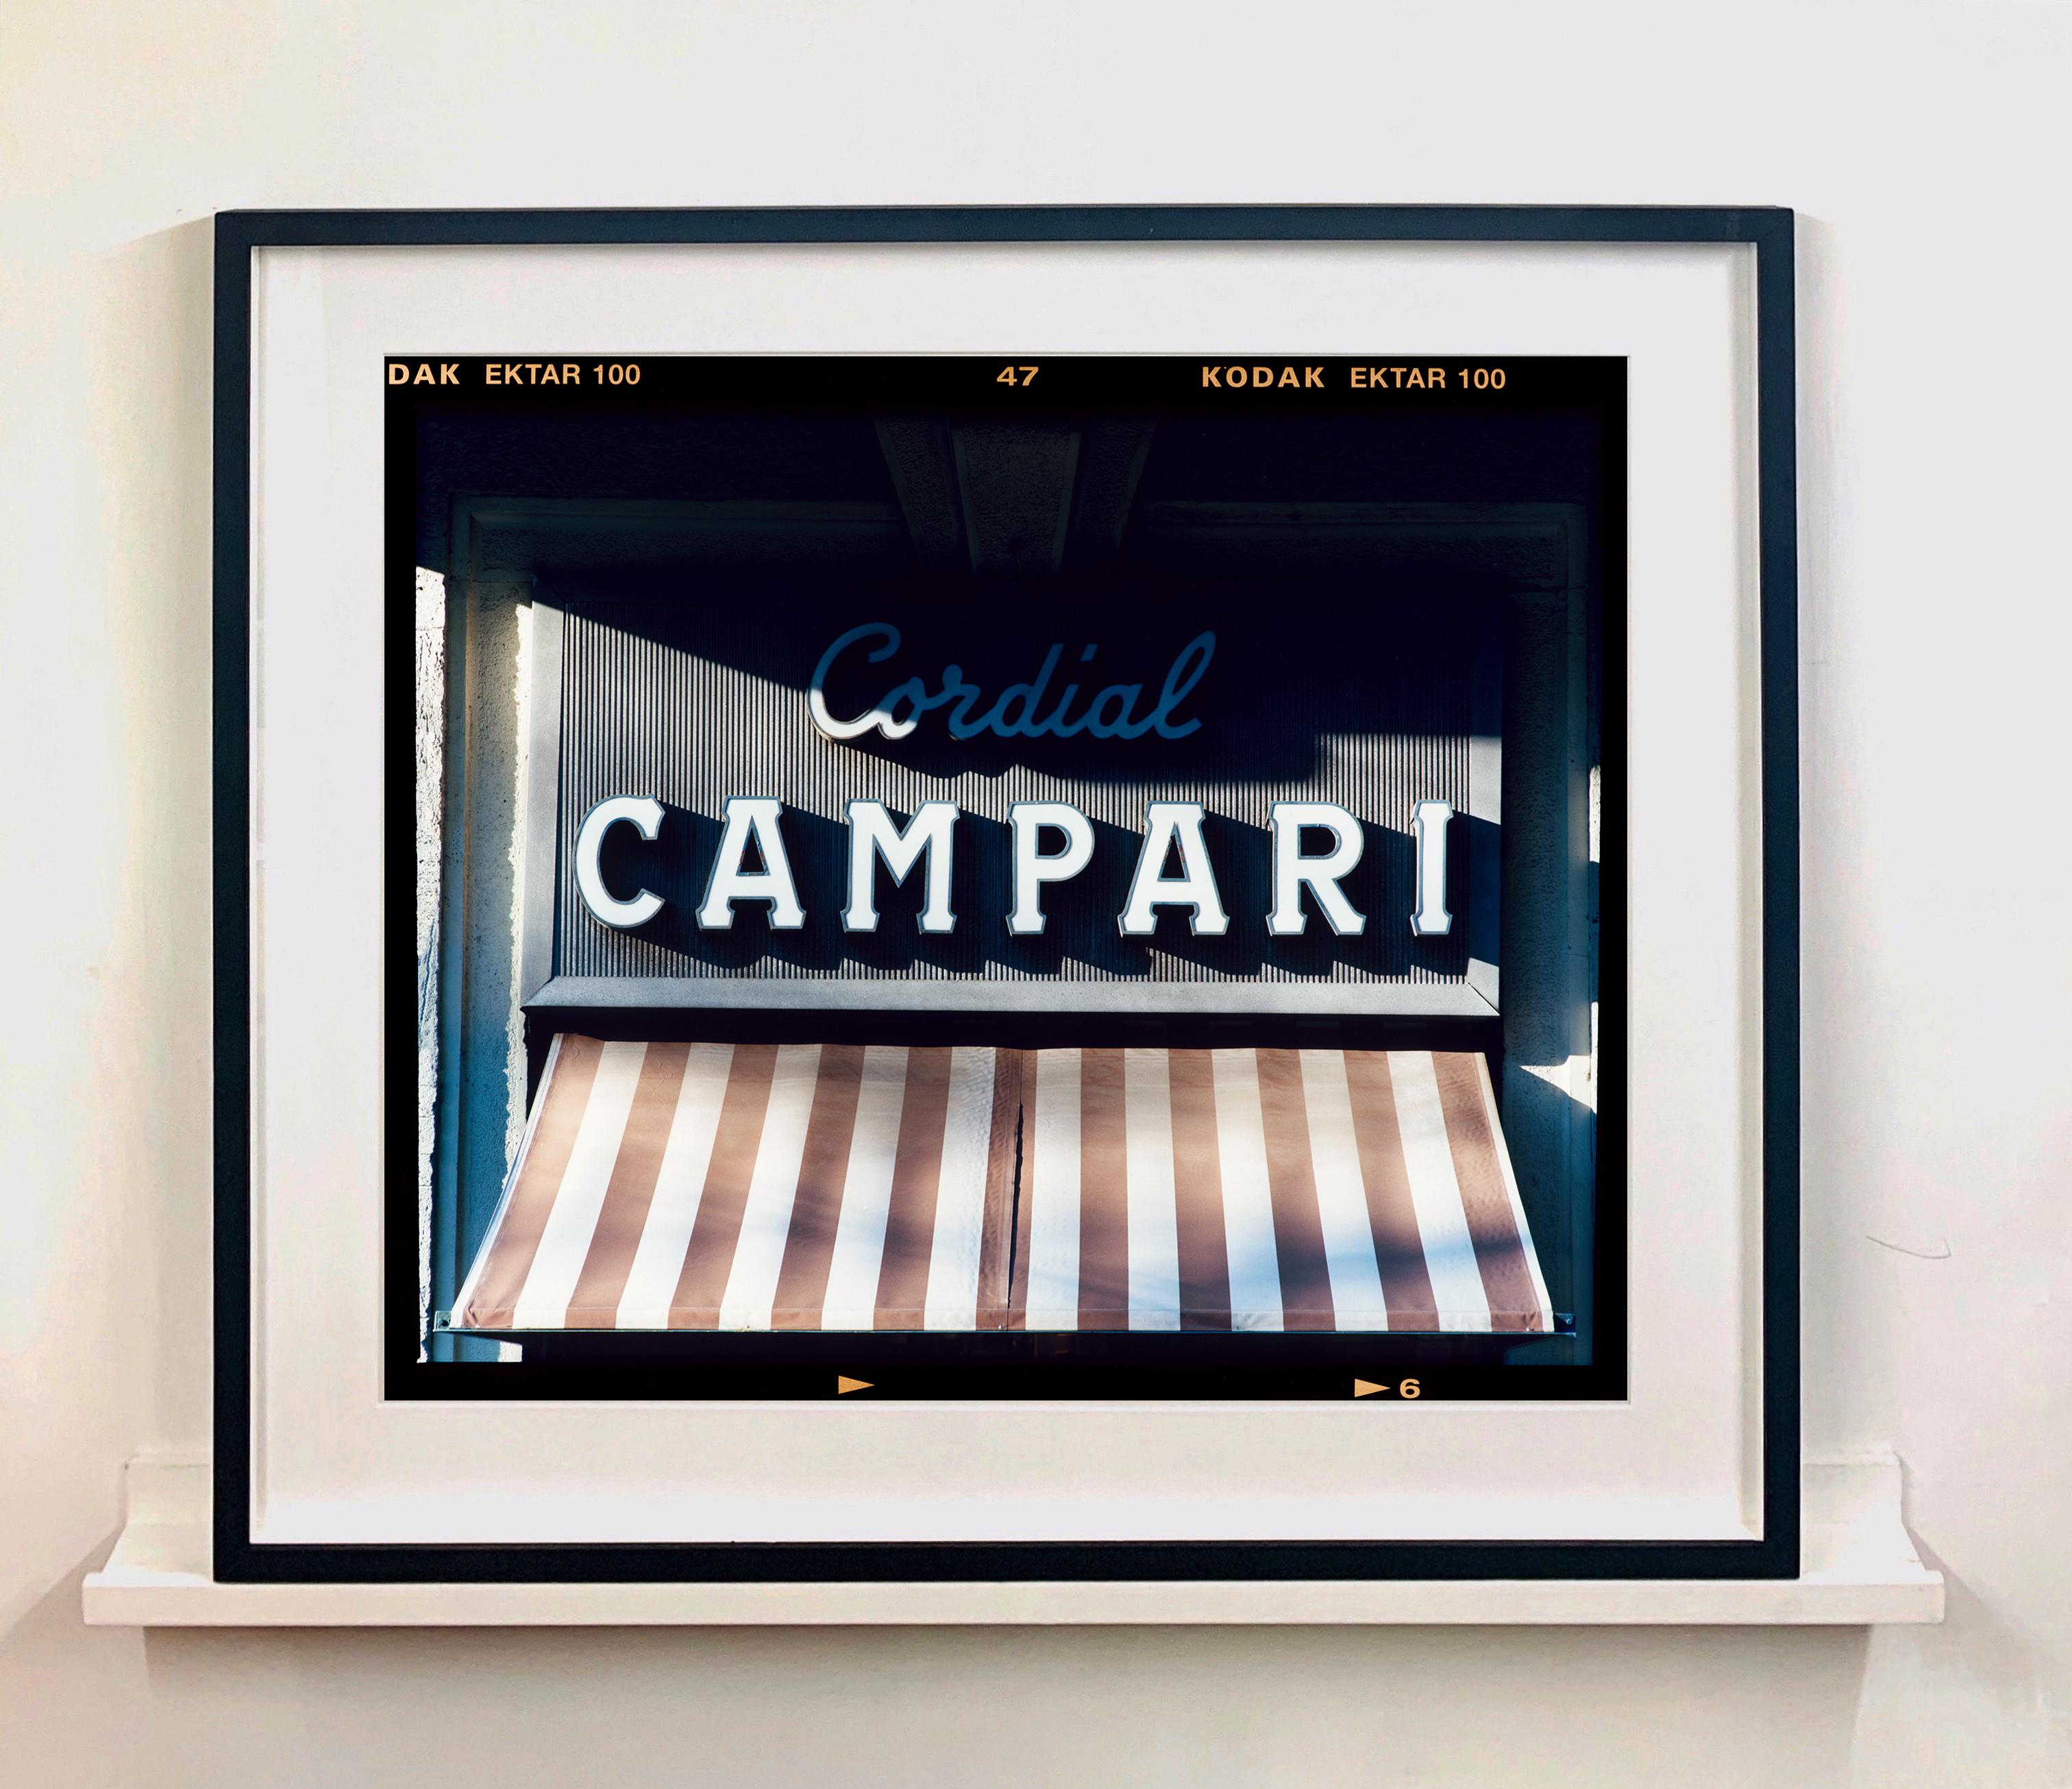 Cordial Campari, Milan - Italian Architectural Color Photography For Sale 1